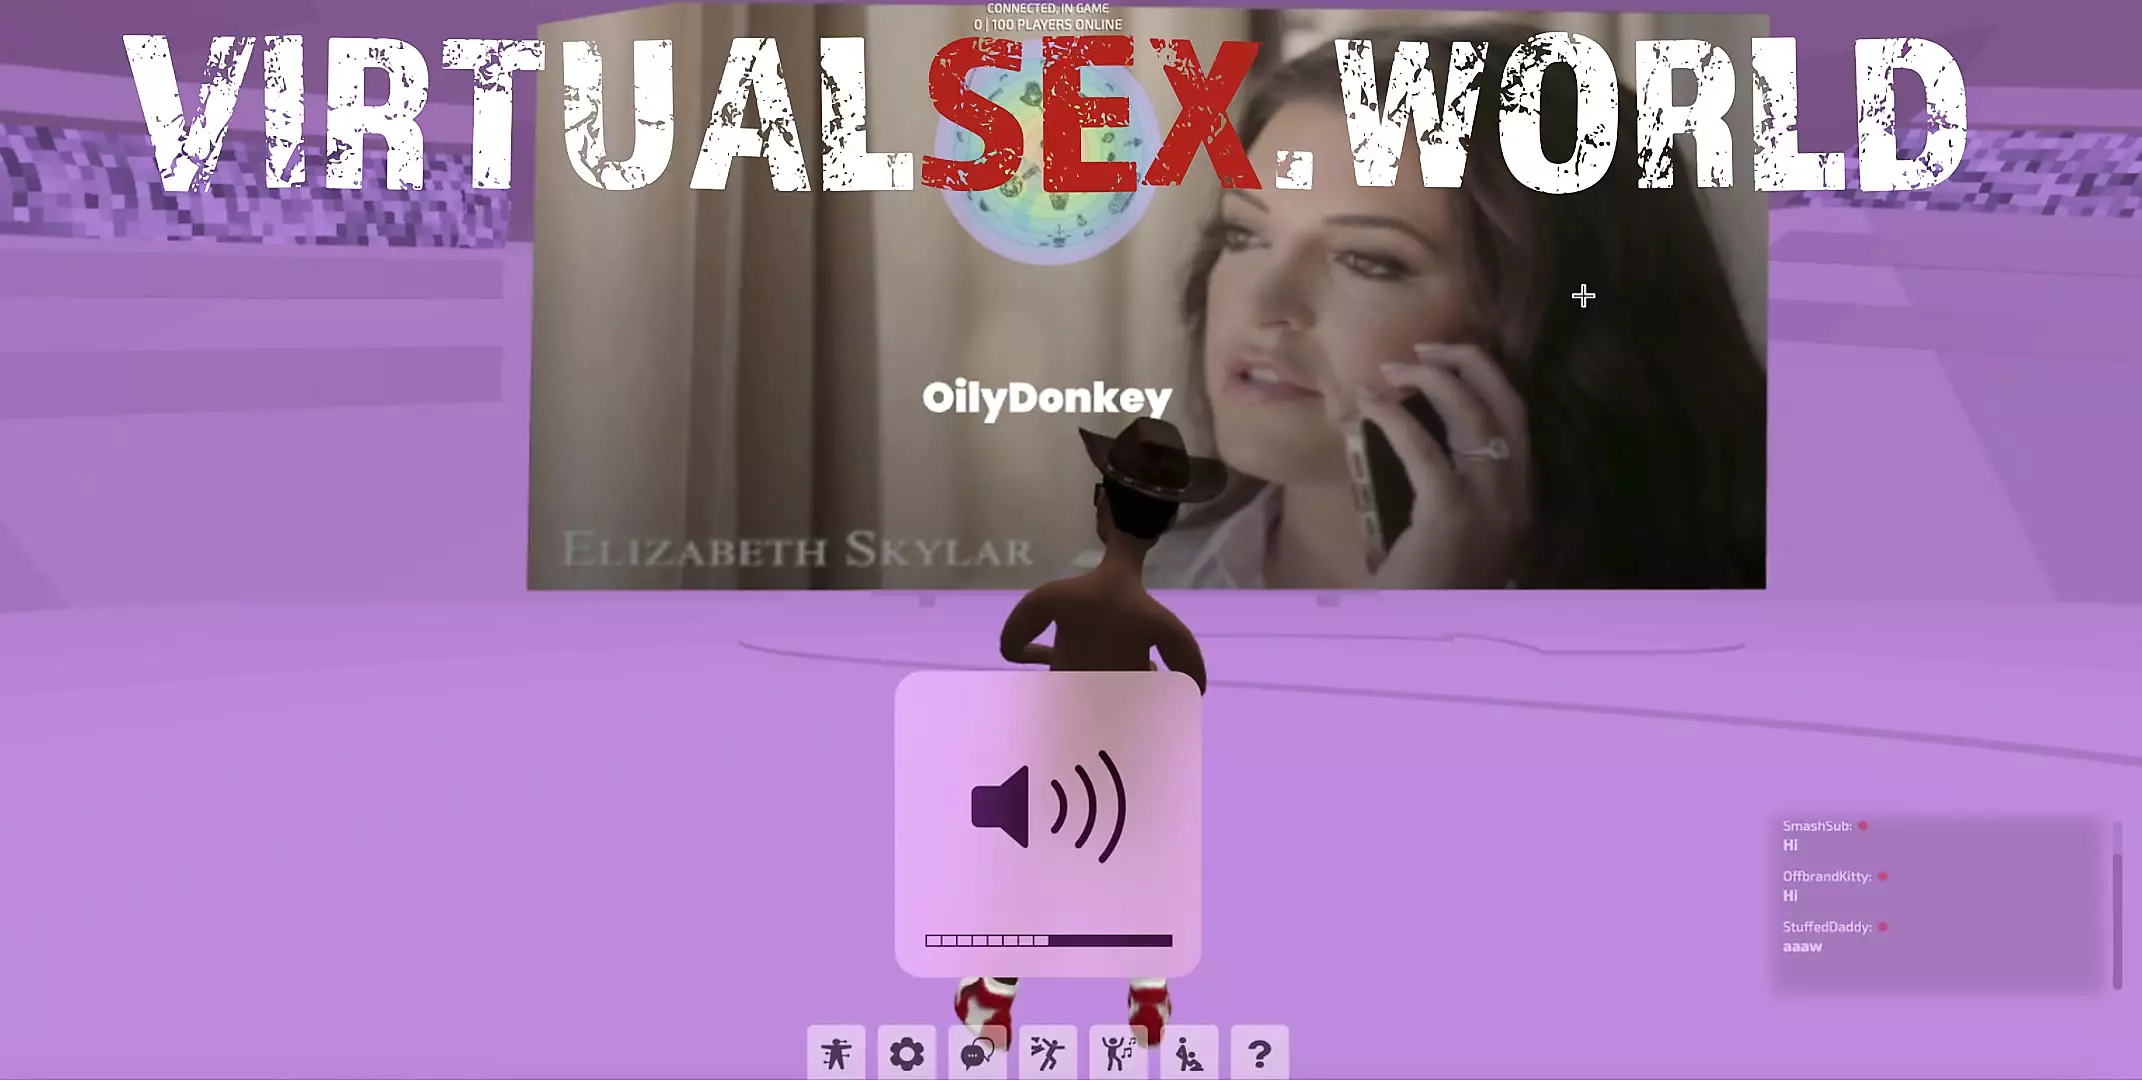 Running around Virtual Sex World to watch Elizabeth Skylar in Dirty Wives Club and Tonights Girlfriend photo